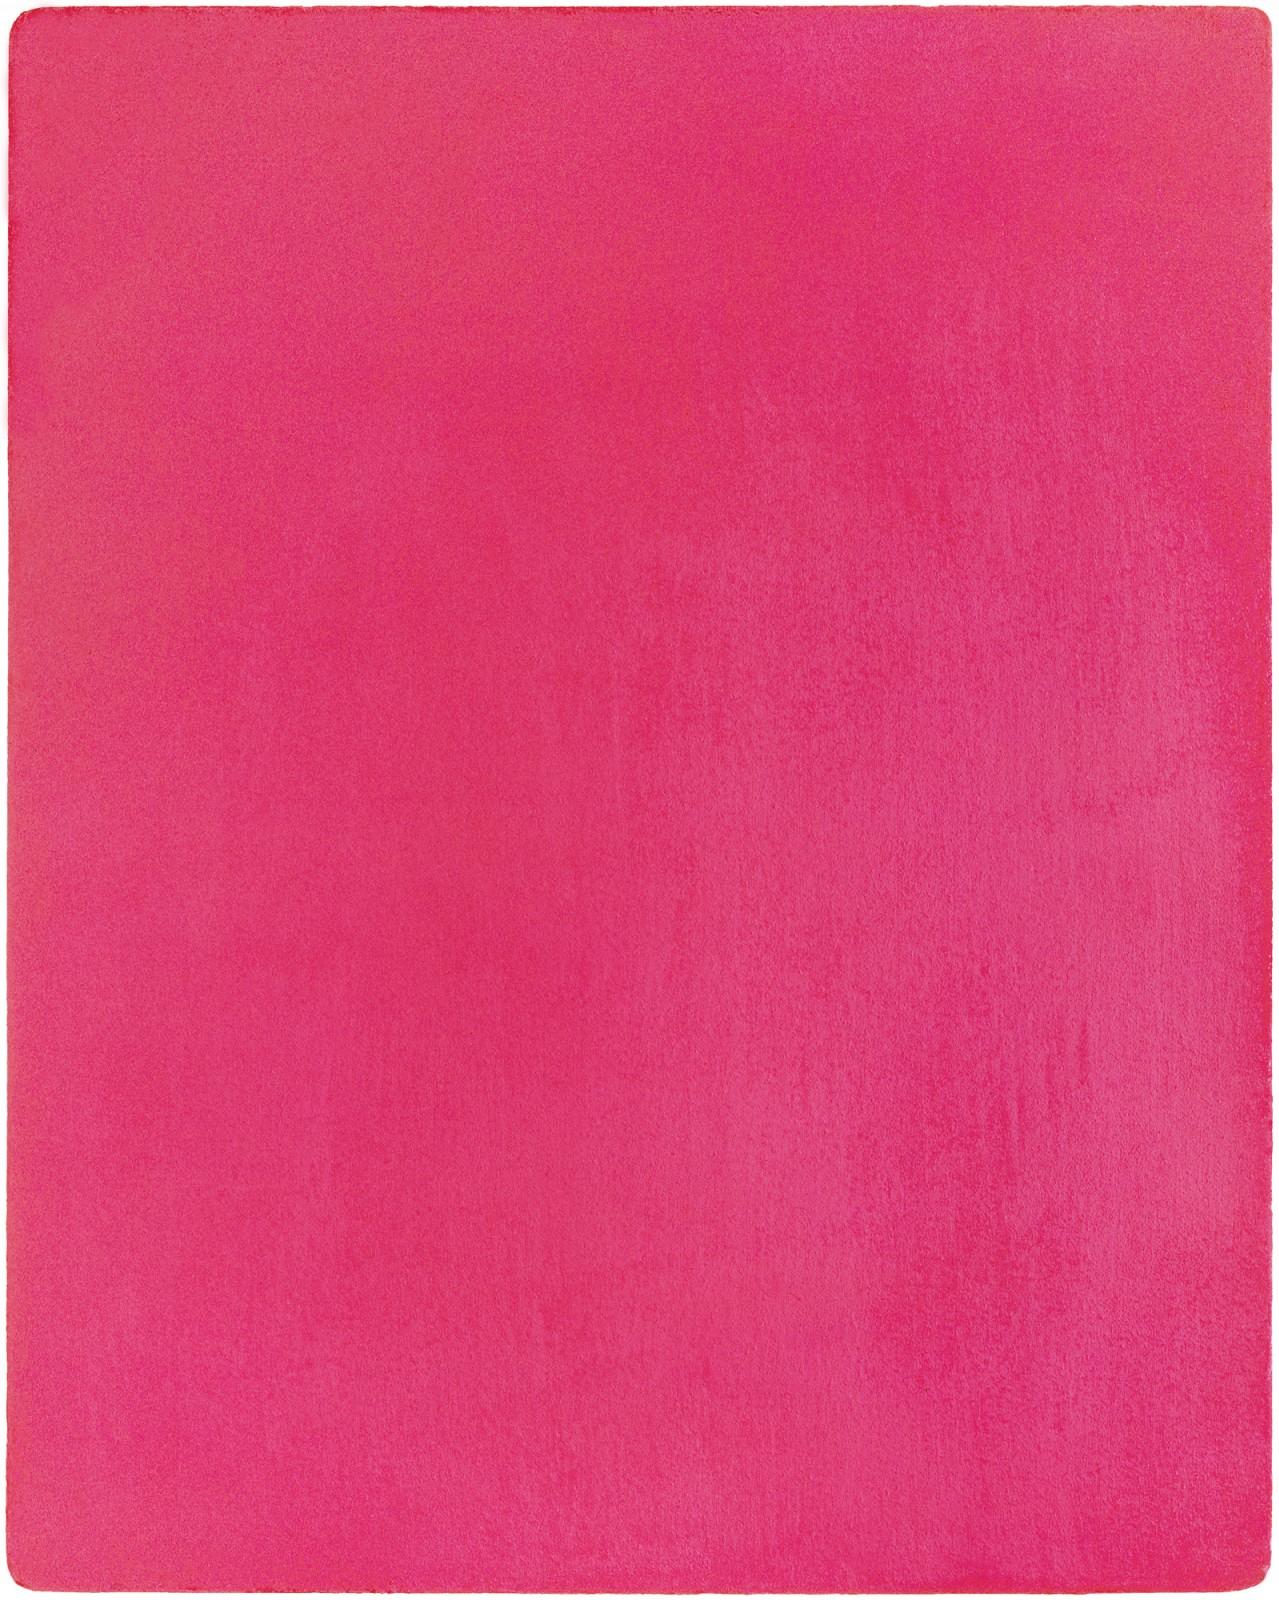 Untitled Pink Monochrome